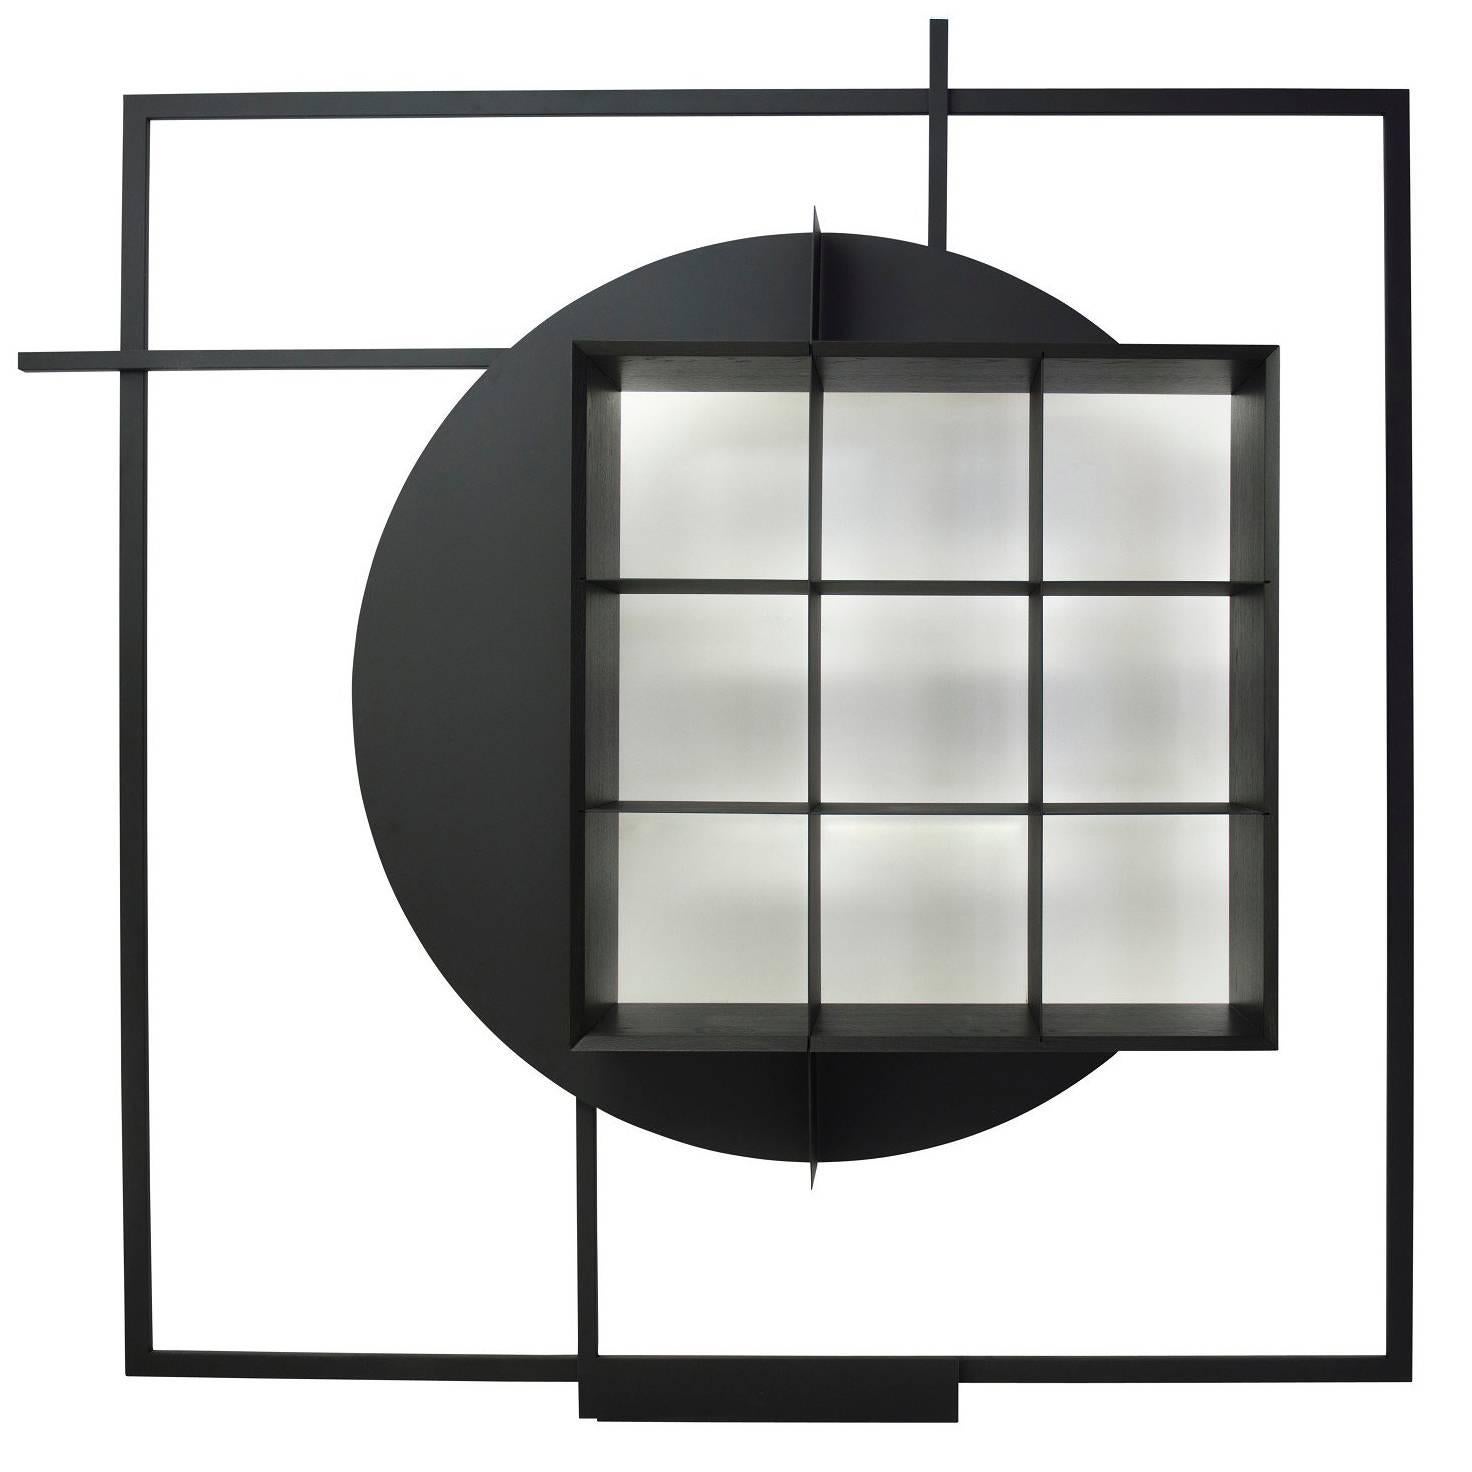 Black Metal  Shelf Object COM:POS:ITION 2.C Contemporary Handcrafted Design For Sale